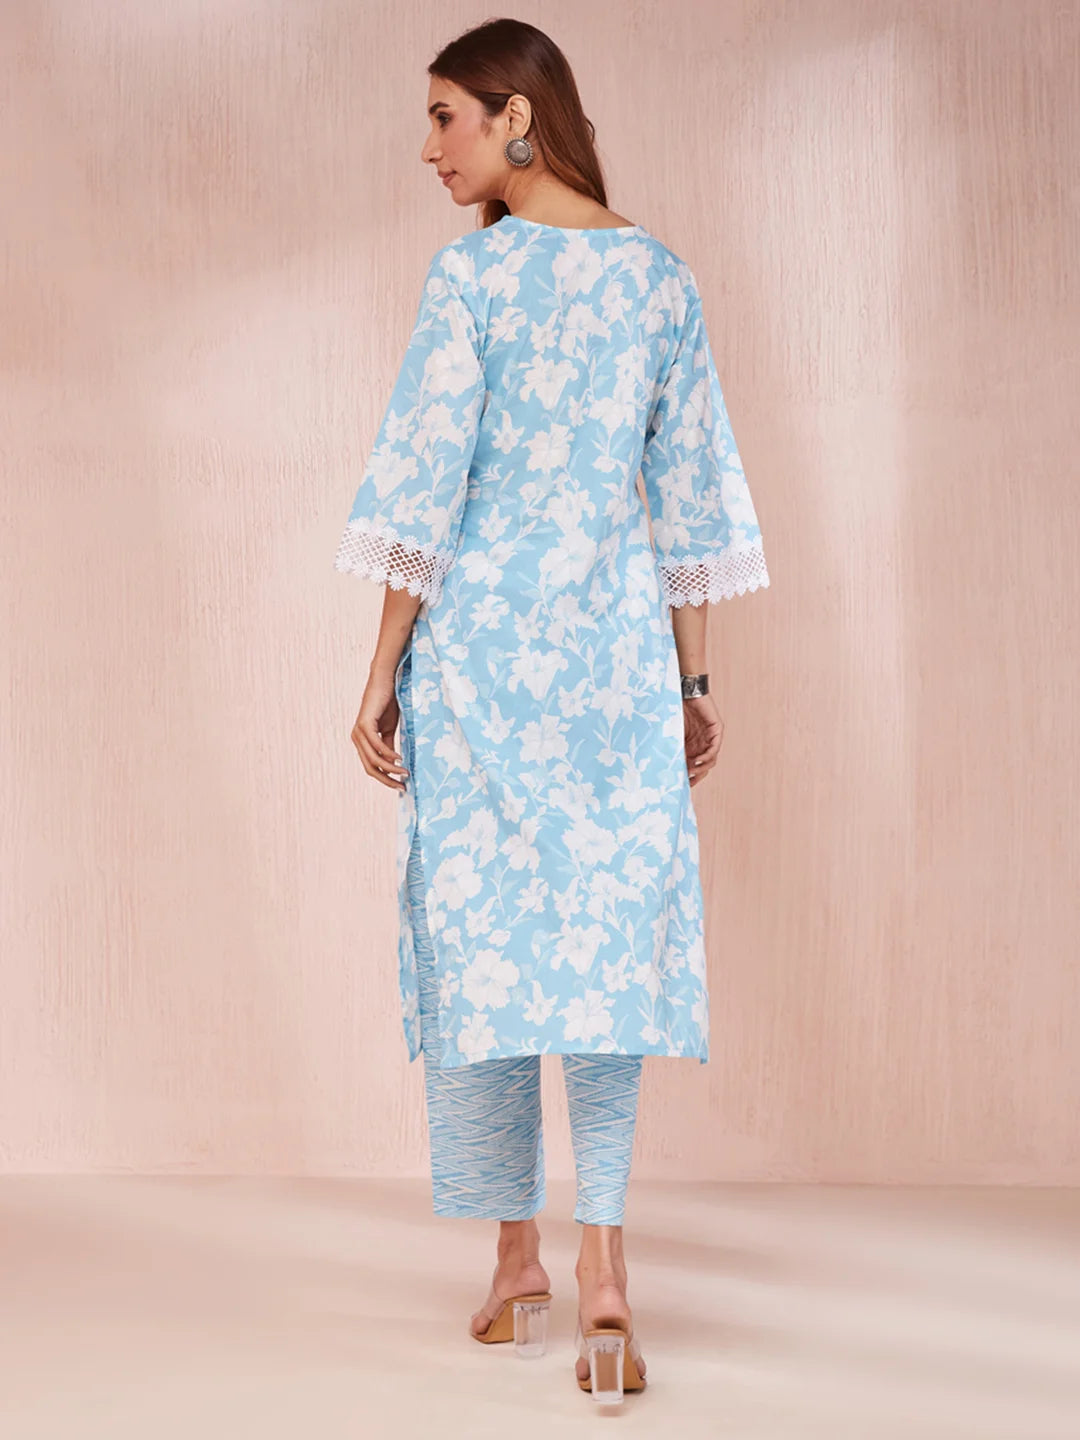 Sky Blue And White Floral Print Lese Sleeves V-Neck Straight Kurta Trouser Set-Yufta Store-6862SKDSBS